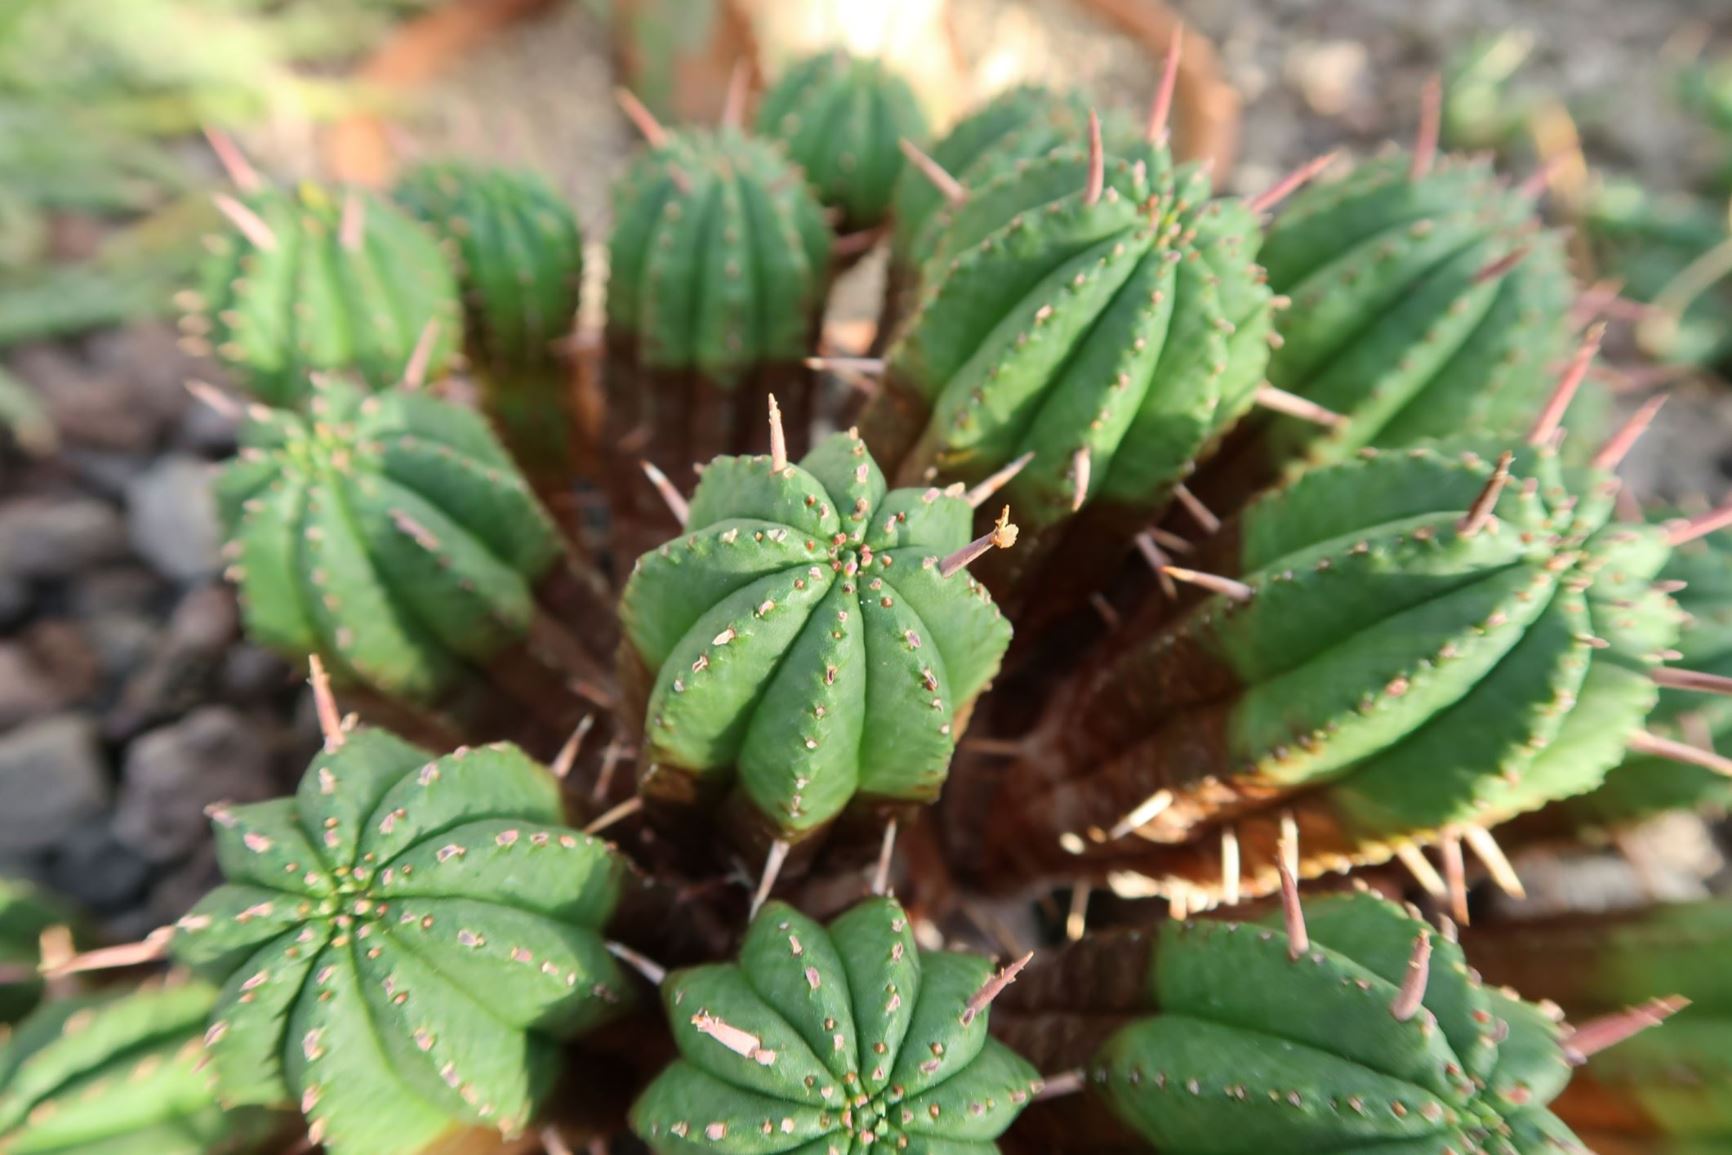 Euphorbia aggregata